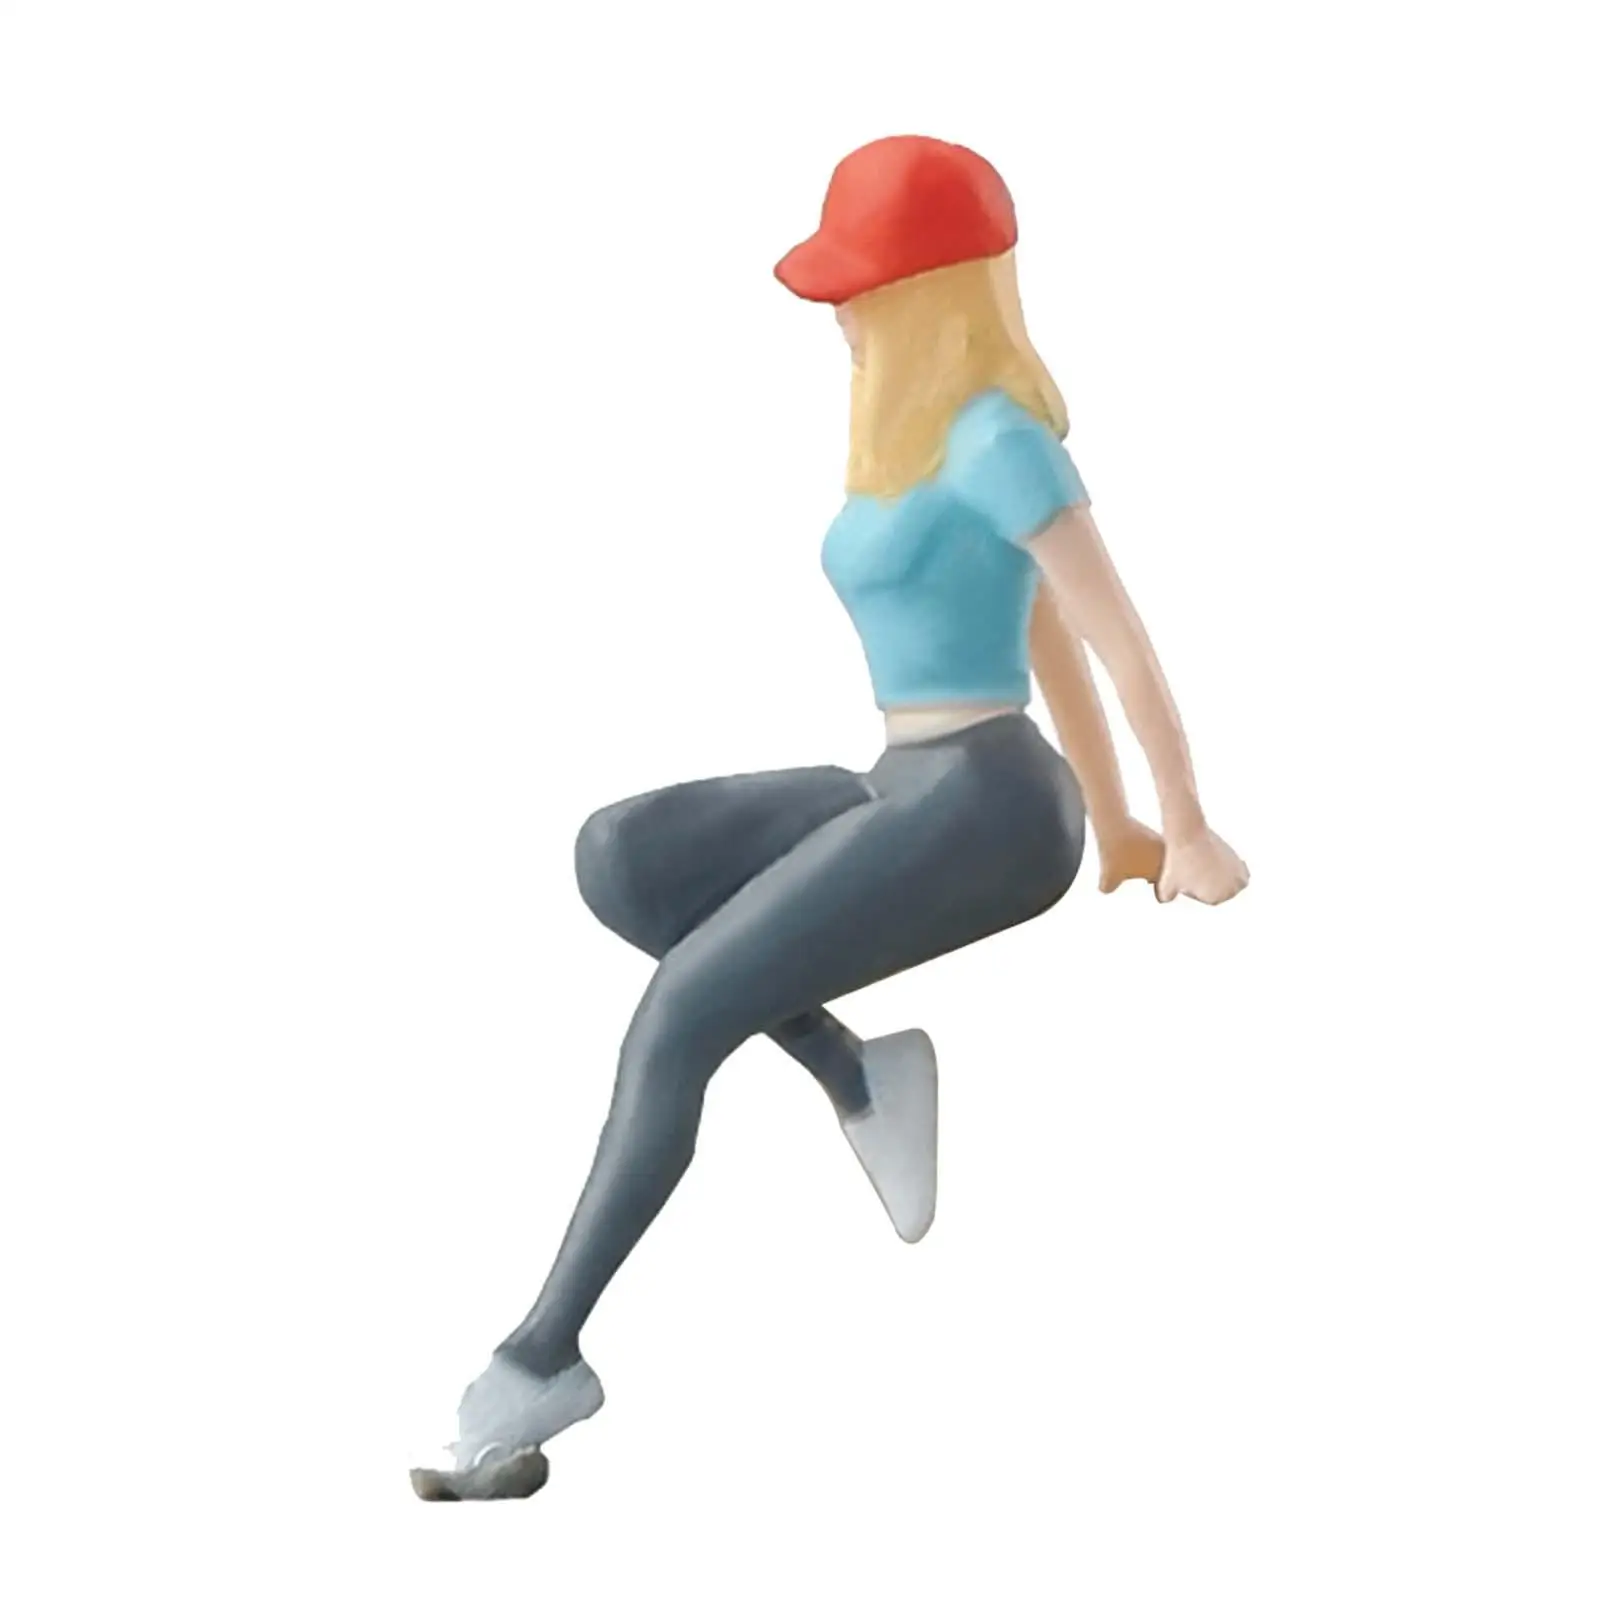 Miniature Scene People Simulated Girl Figures People Figurines 1:64 Girl Figure for Diorama